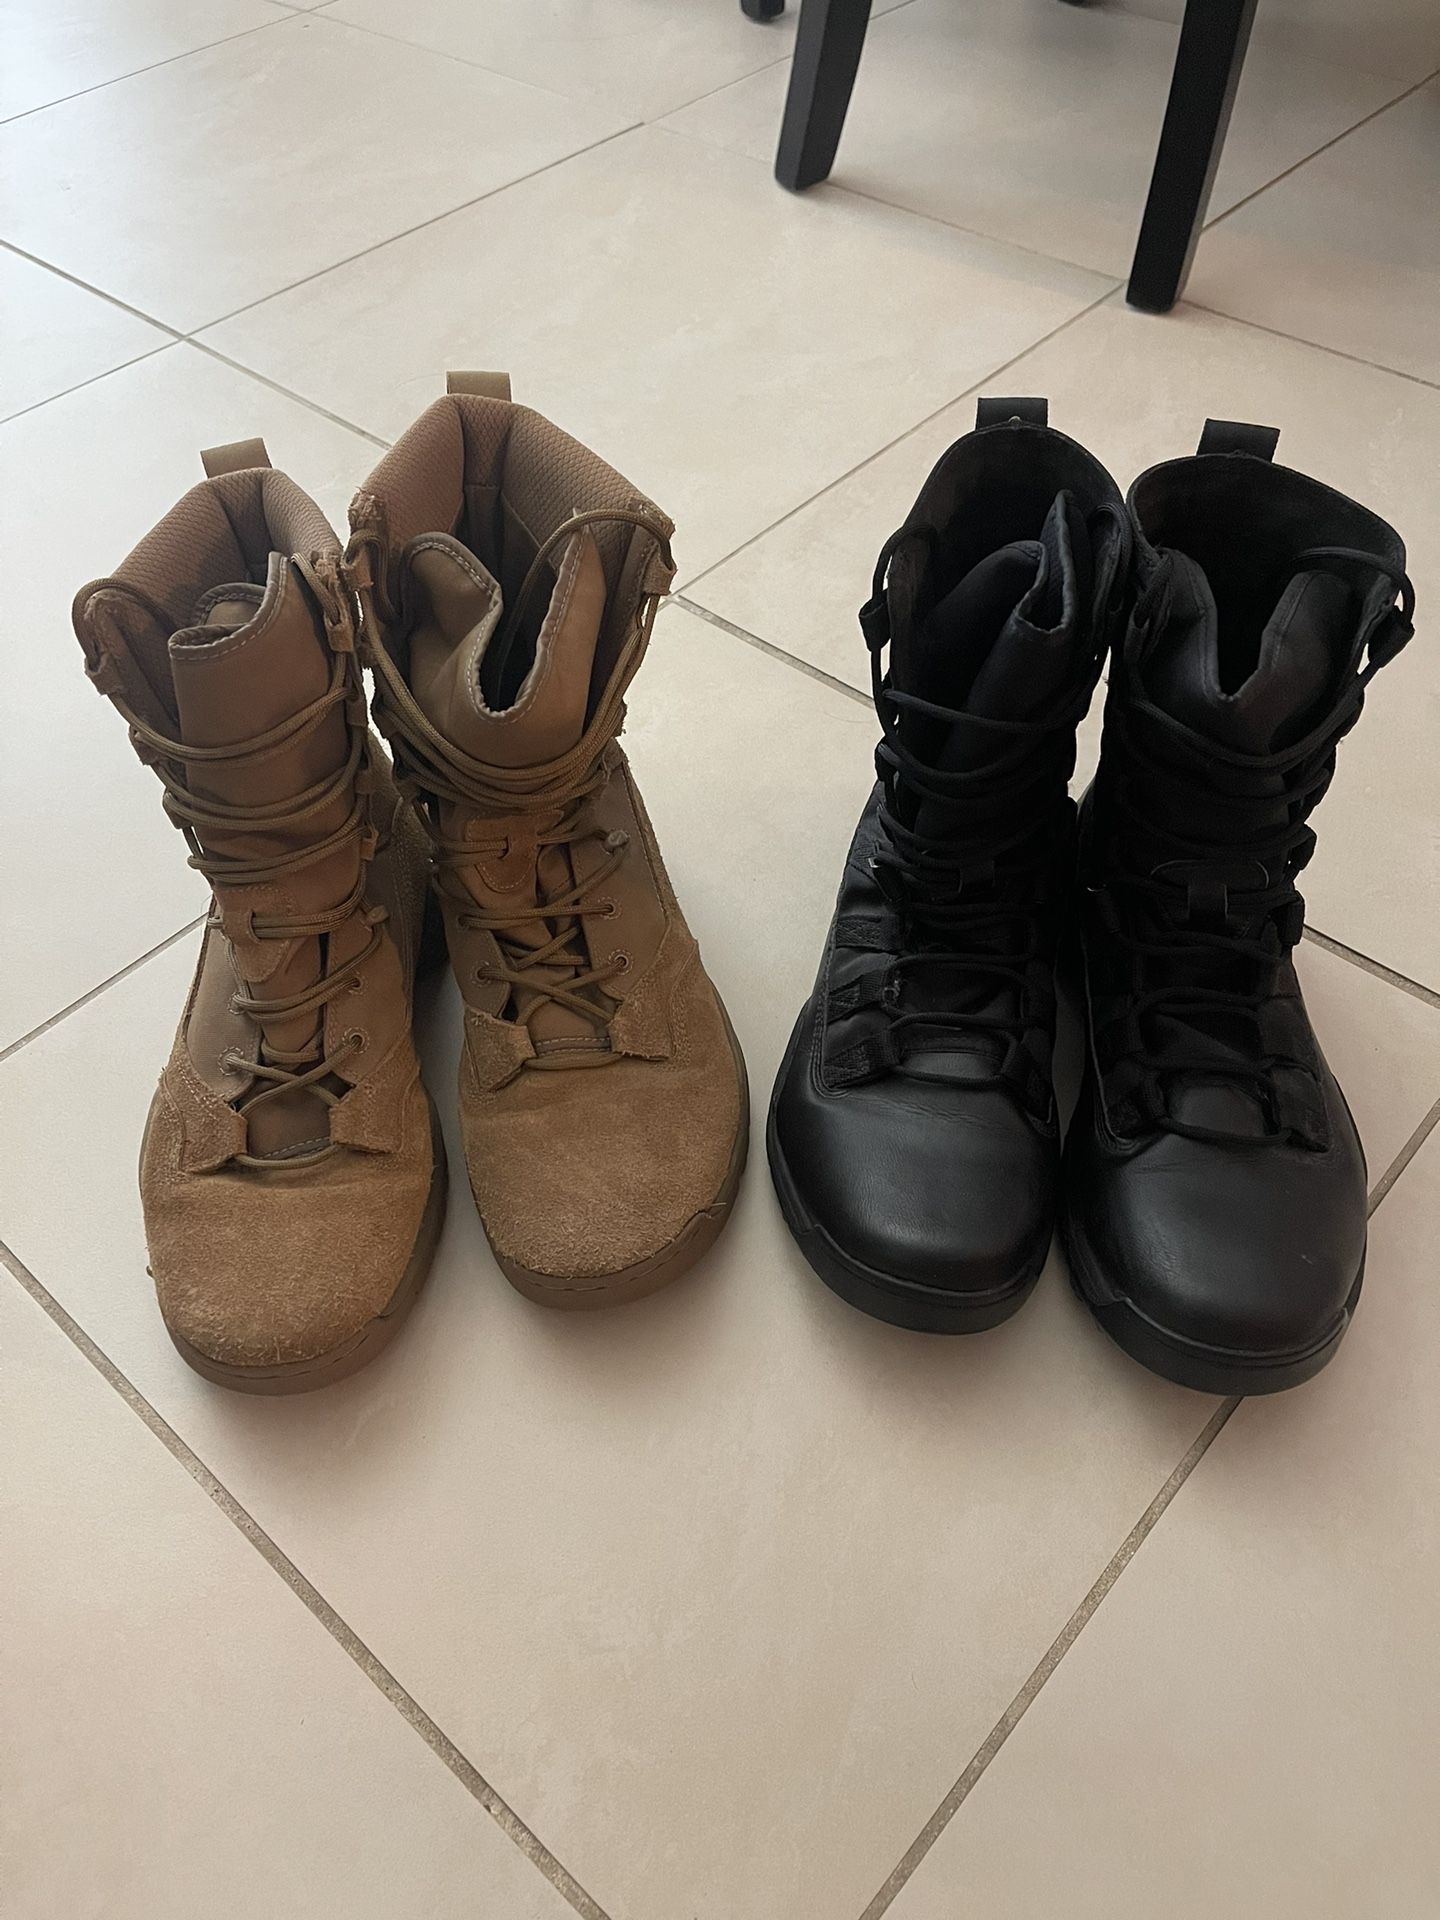 Nike Combat Boots 11.5